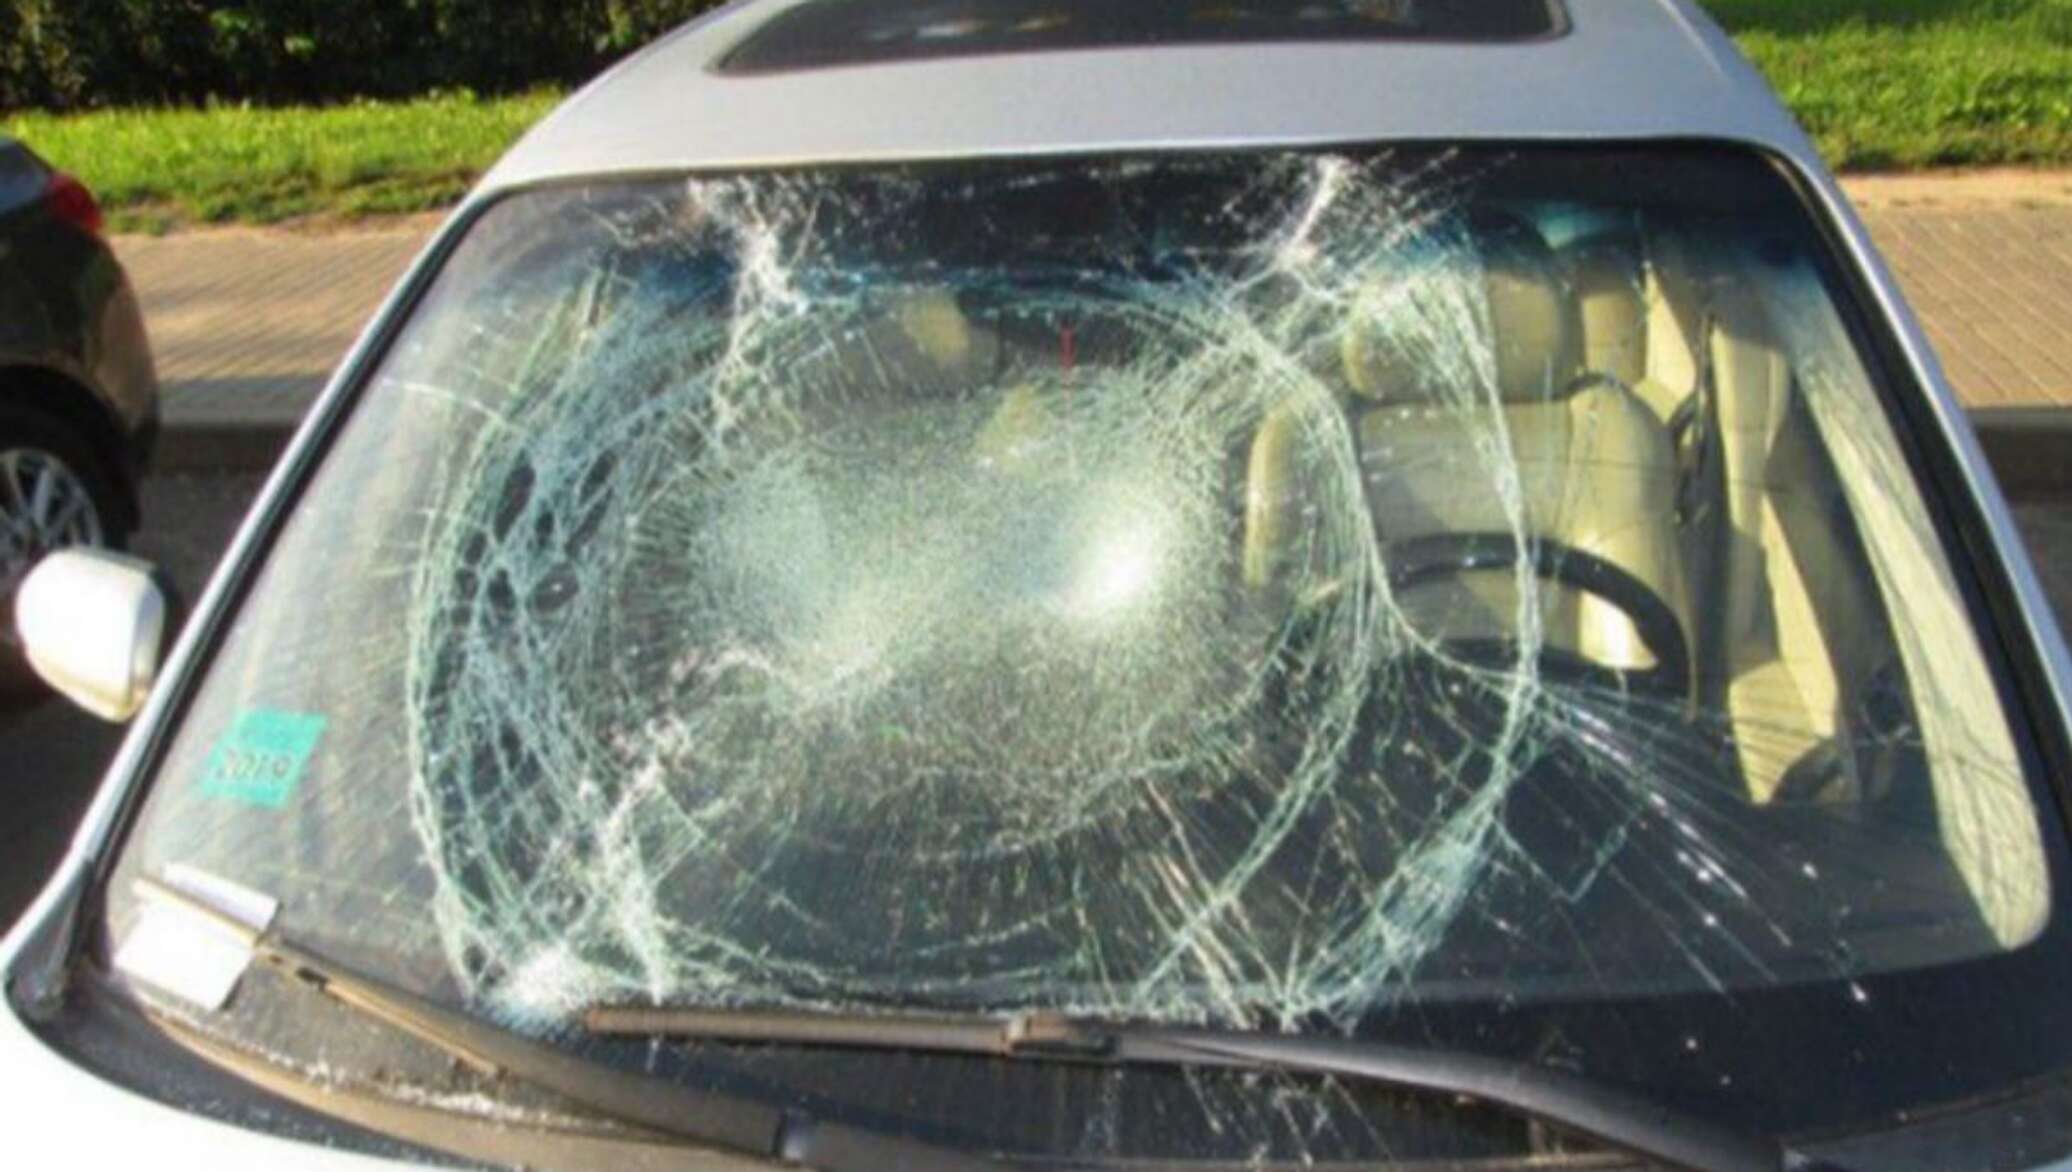 Разбитое лобовое стекло машины. Разбито лобовое стекло. Разбитые лобовые стекла. Треснутое лобовое стекло. Машина с разбитым стеклом.